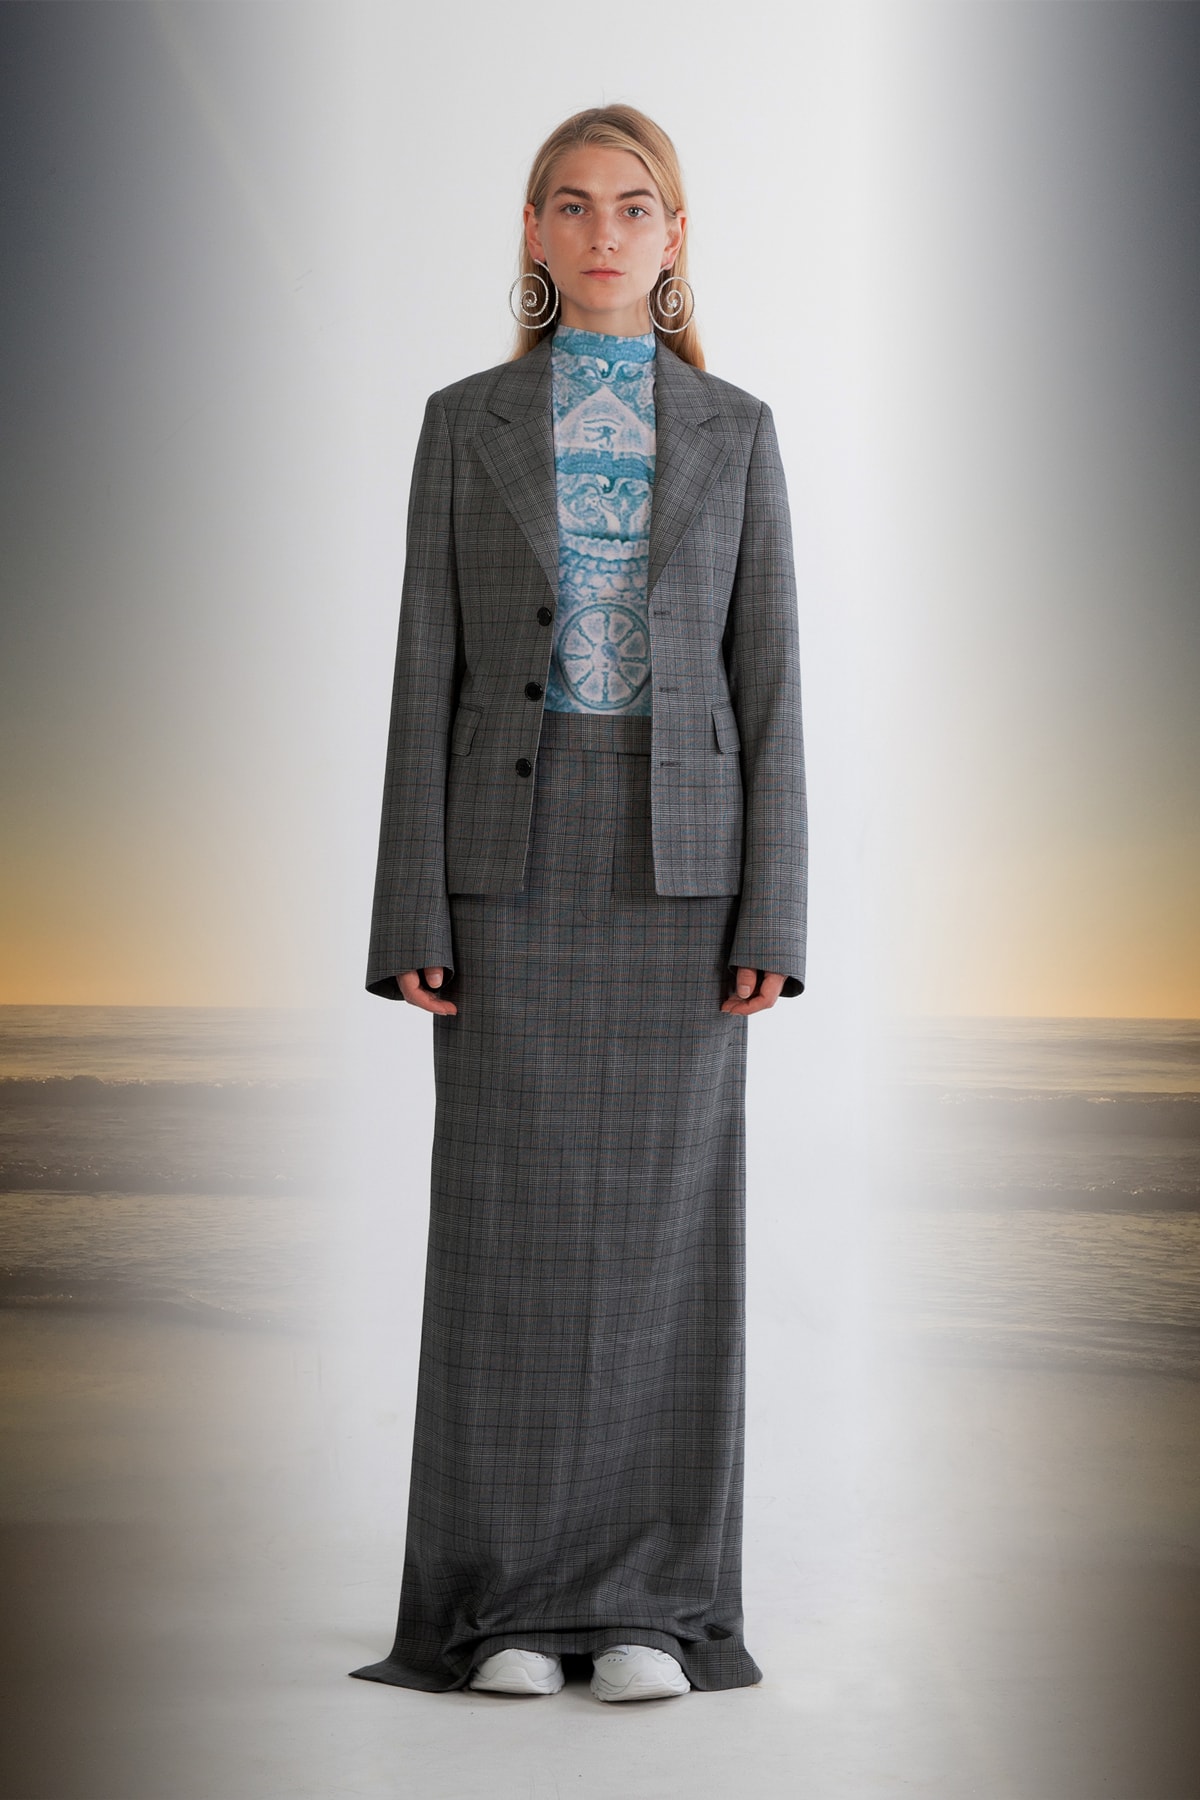 Julia Seeman Fall/Winter 2018 Collection Lookbook Blazer Skirt Grey Top Teal